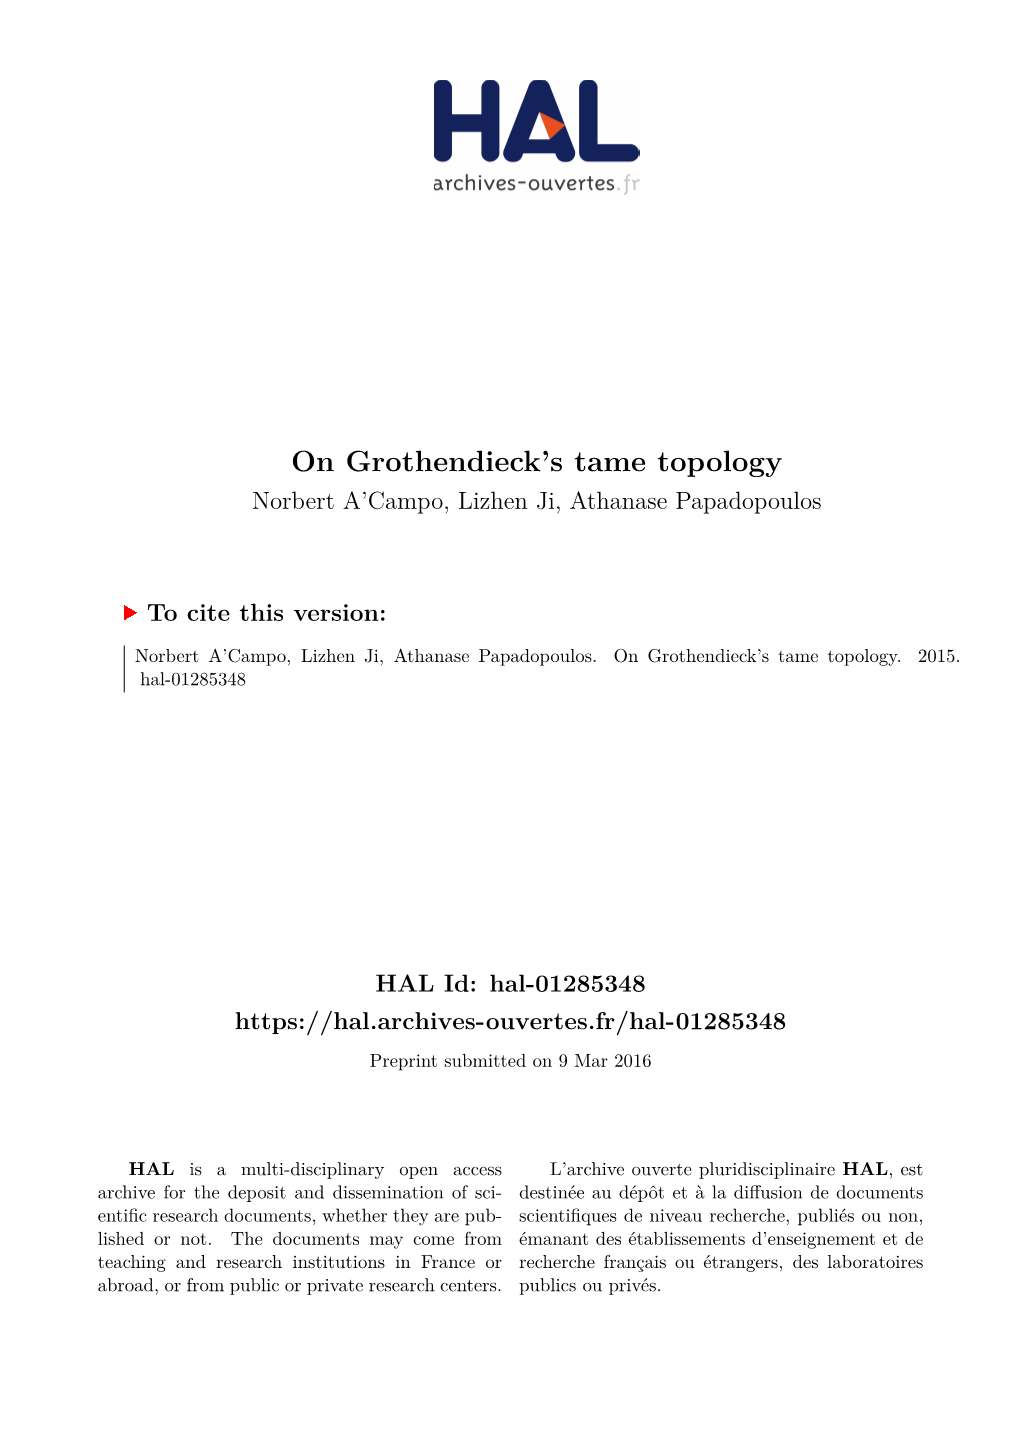 On Grothendieck's Tame Topology